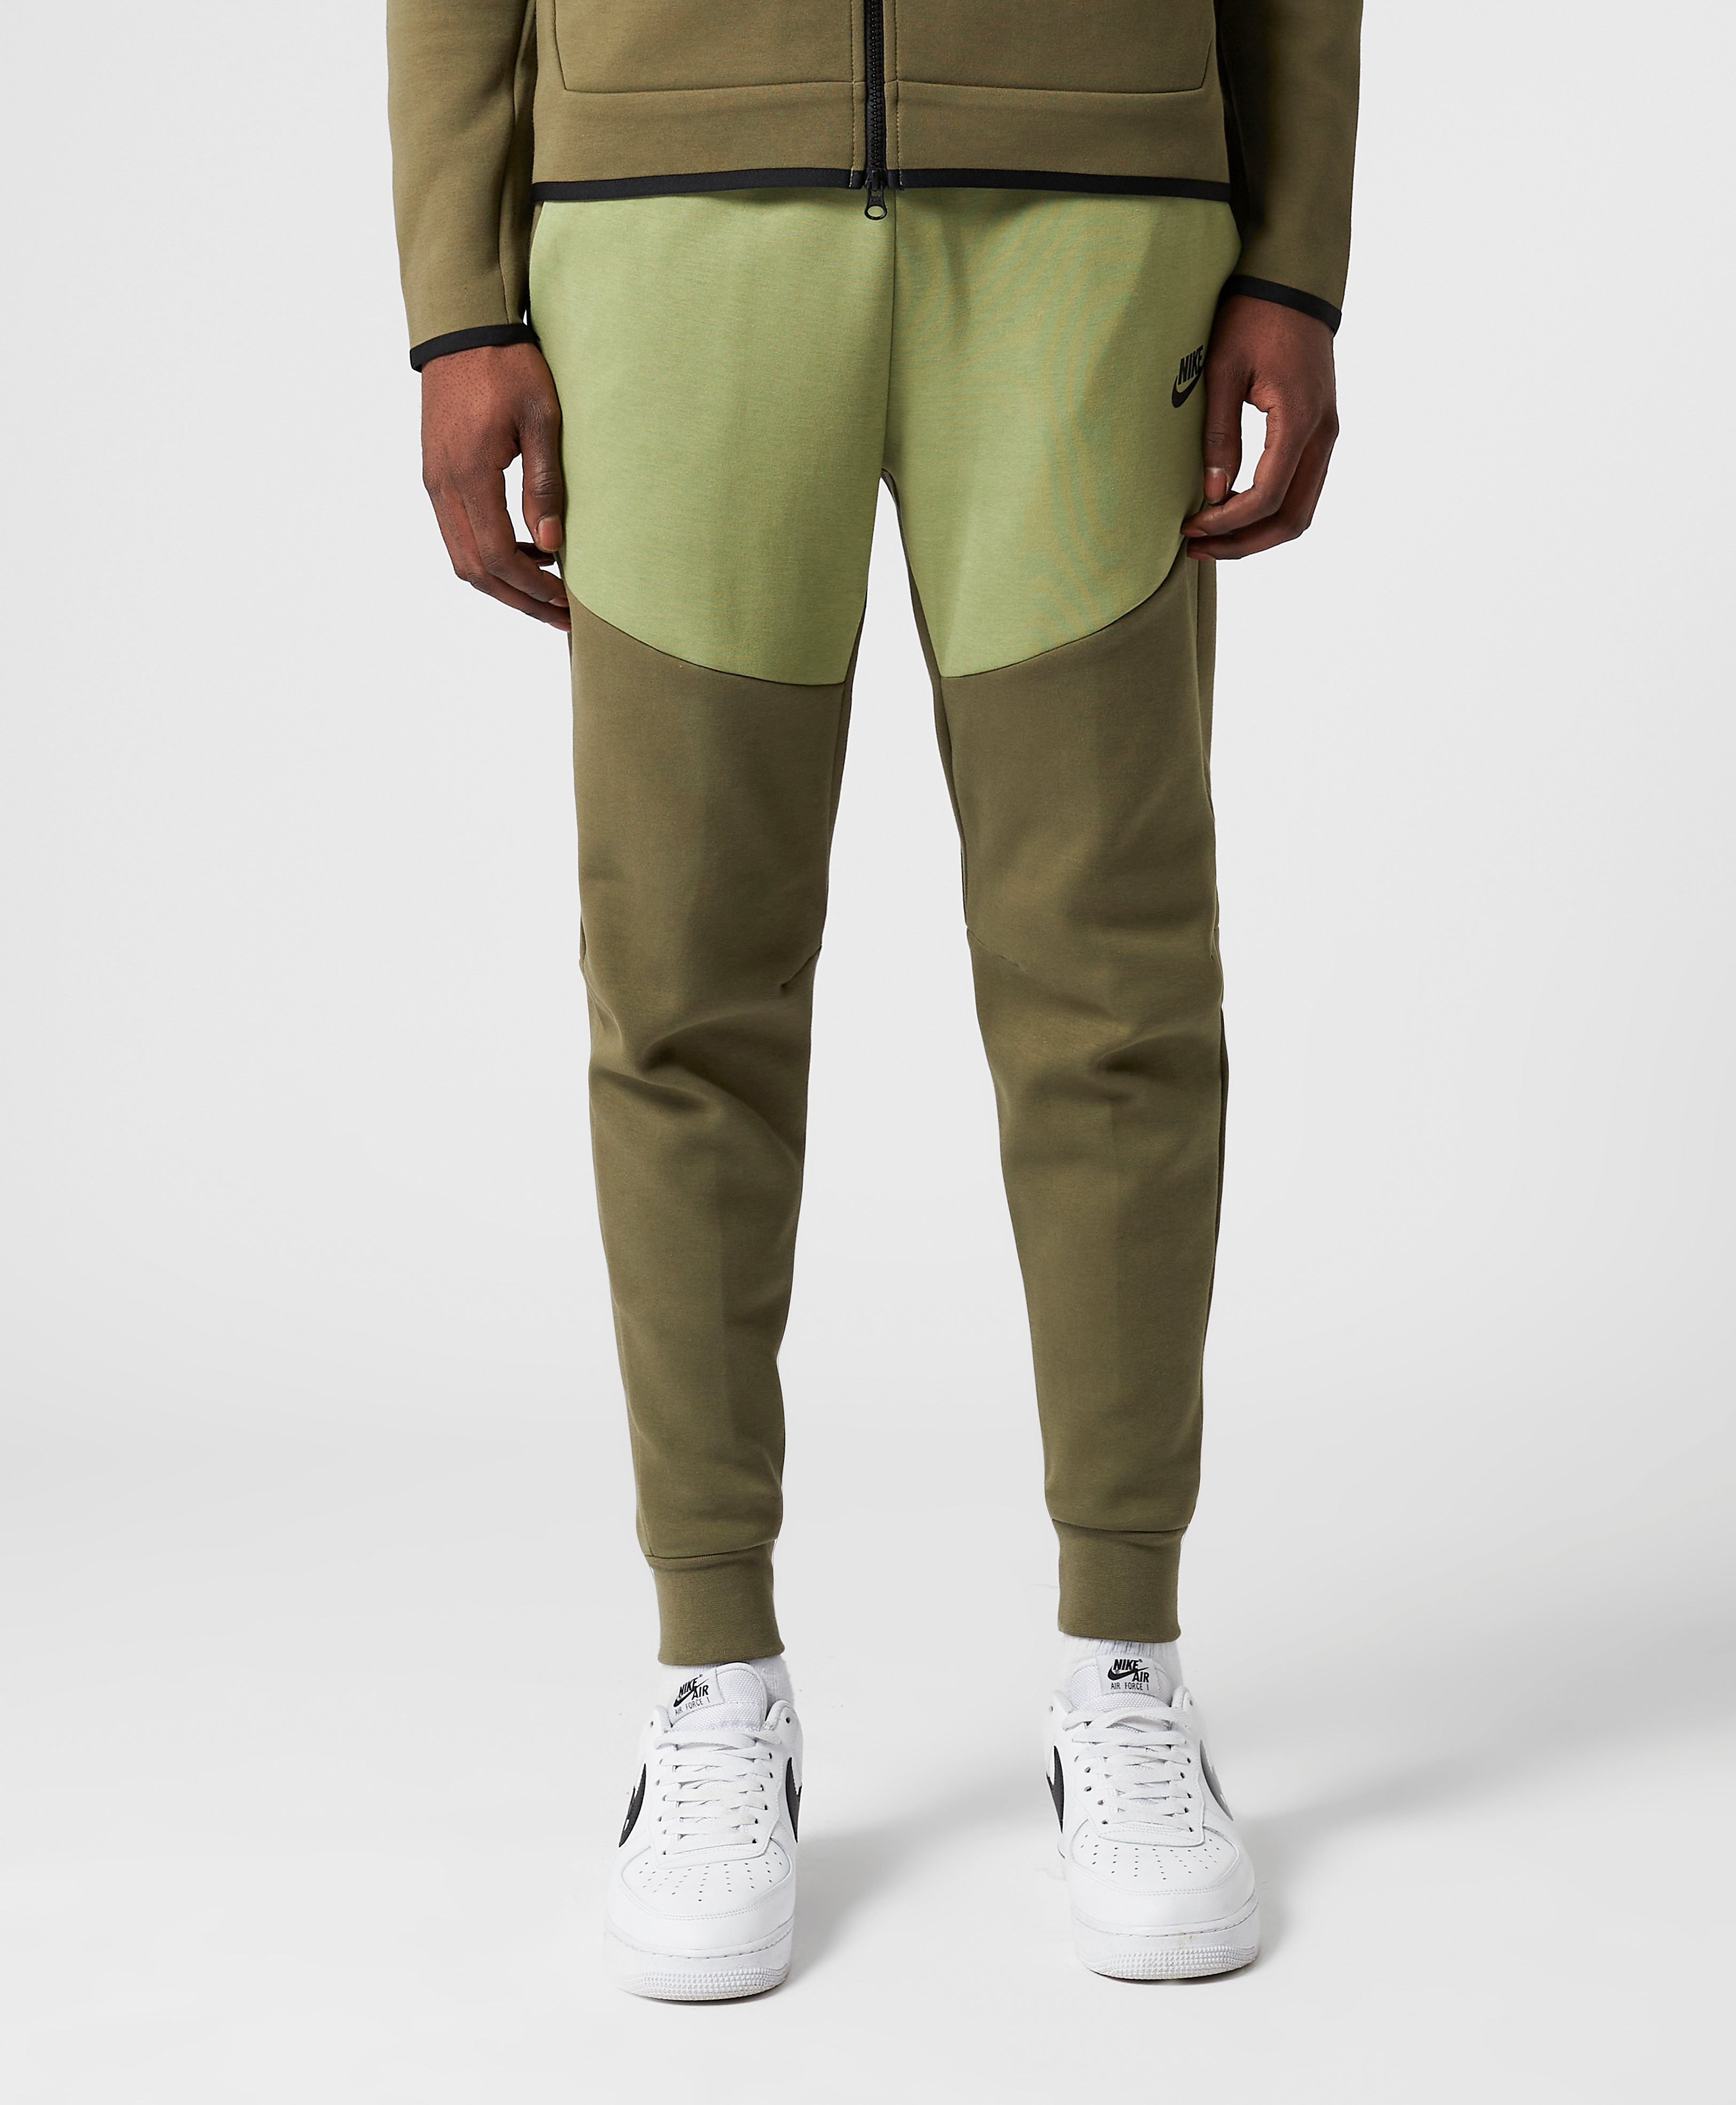 Nike Men's Tech Fleece Joggers - Green, Green